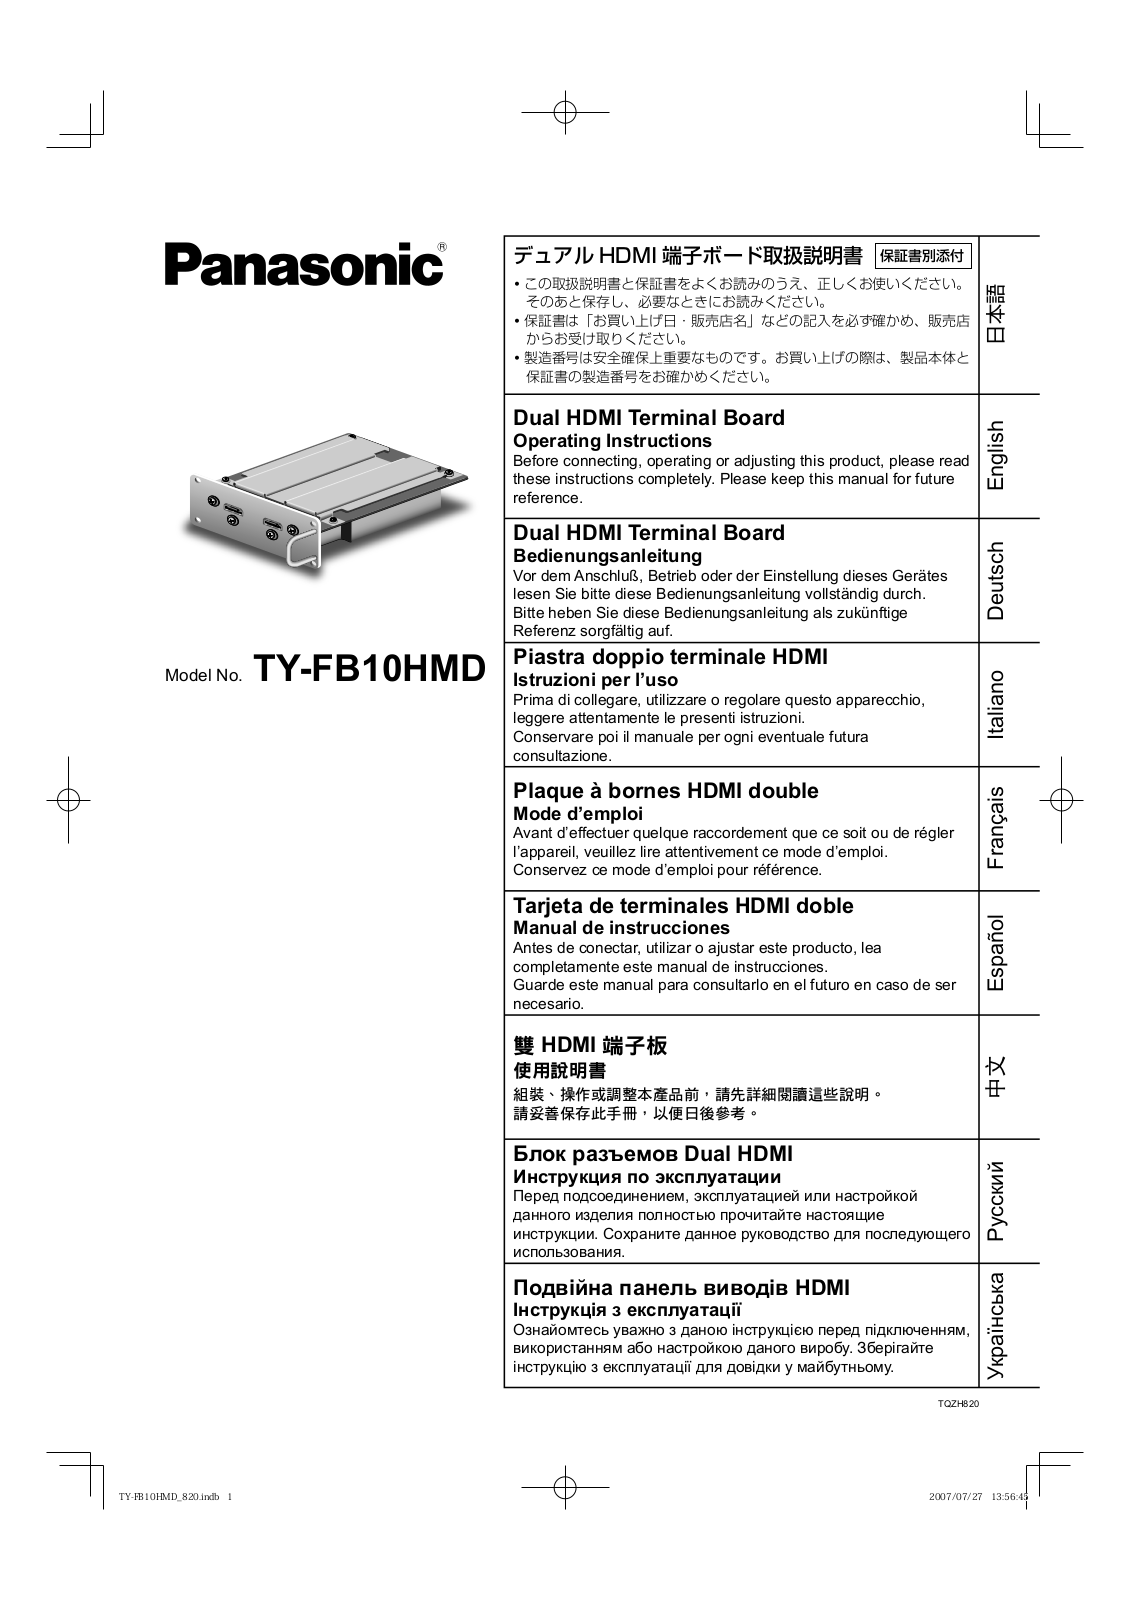 Panasonic TYFB10HMD User Manual